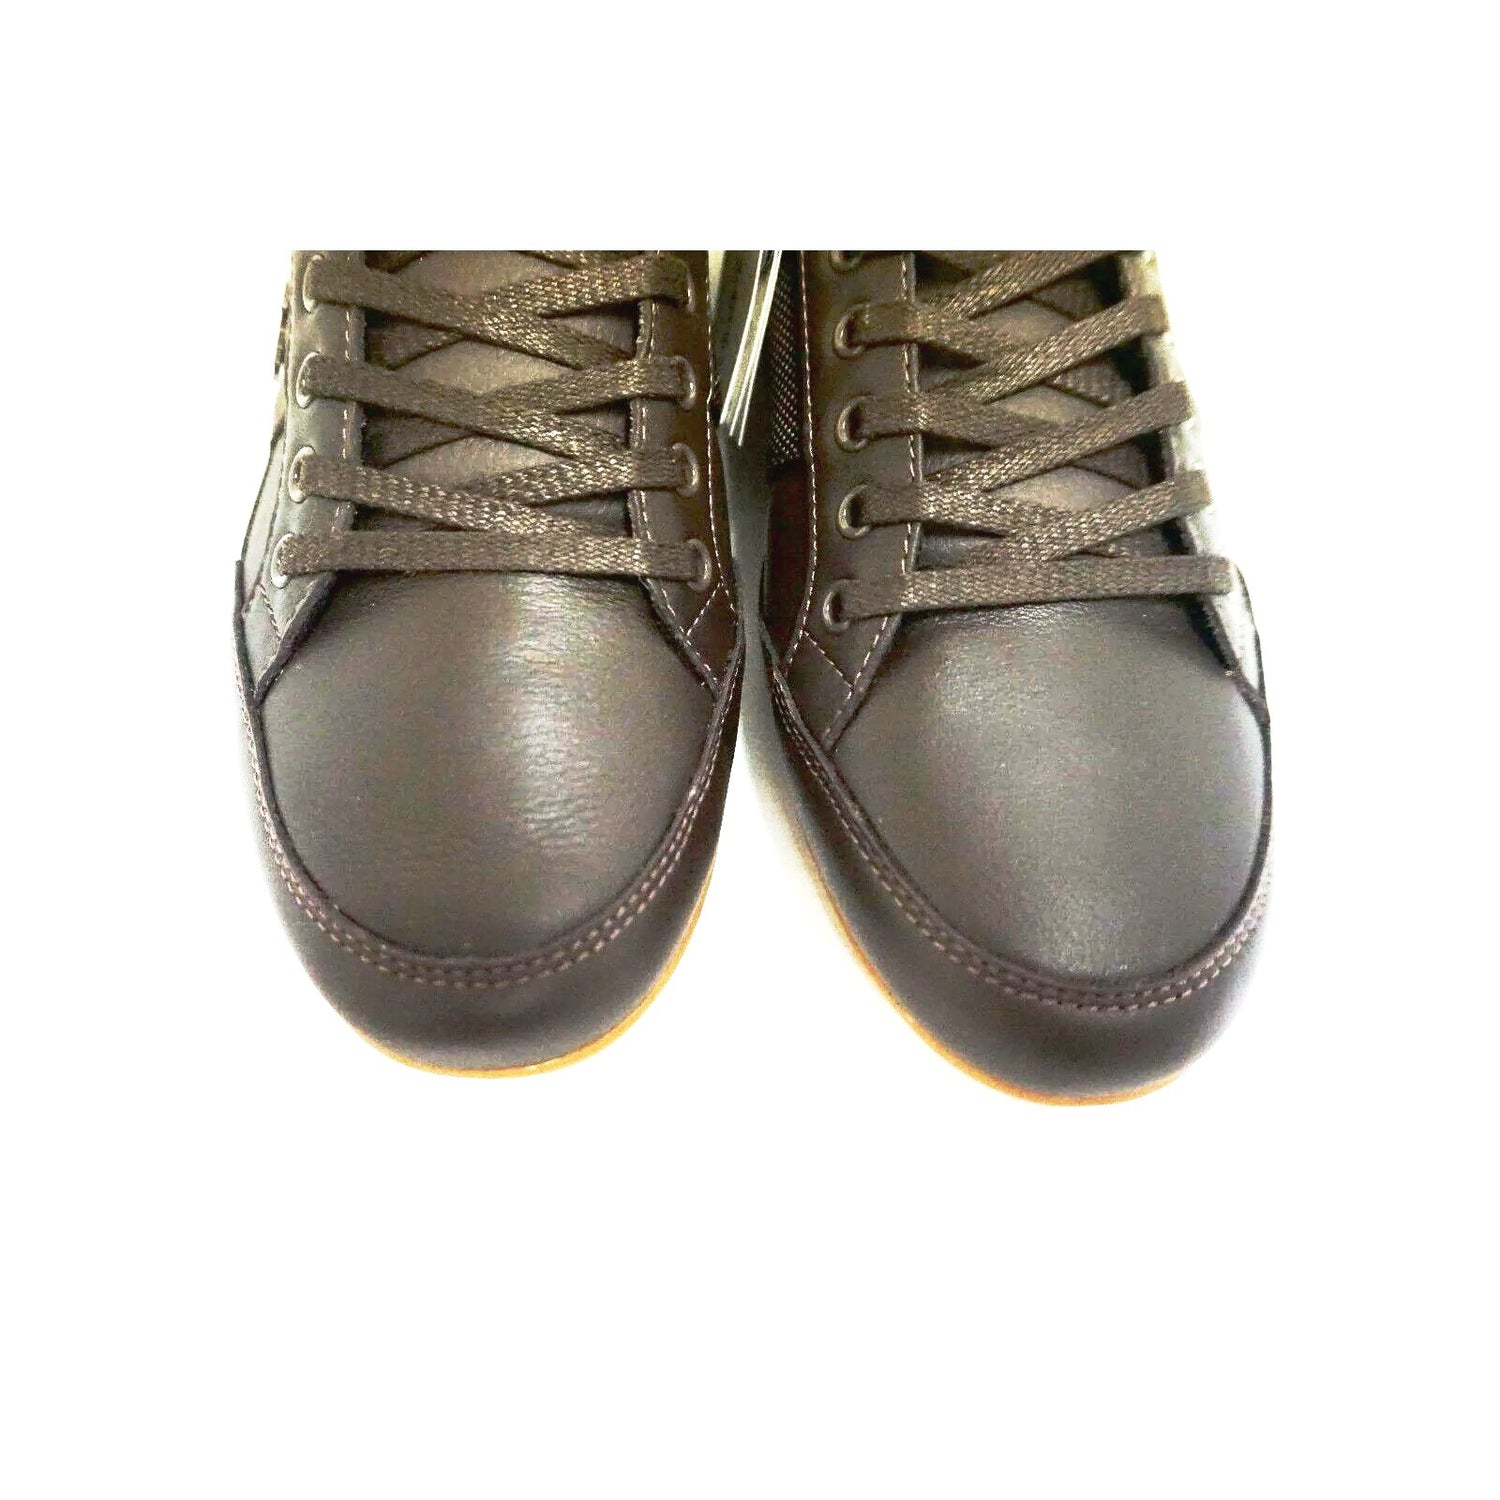 Lacoste men shoes chaymon 116 1 spm leather dark brown black size 8 new